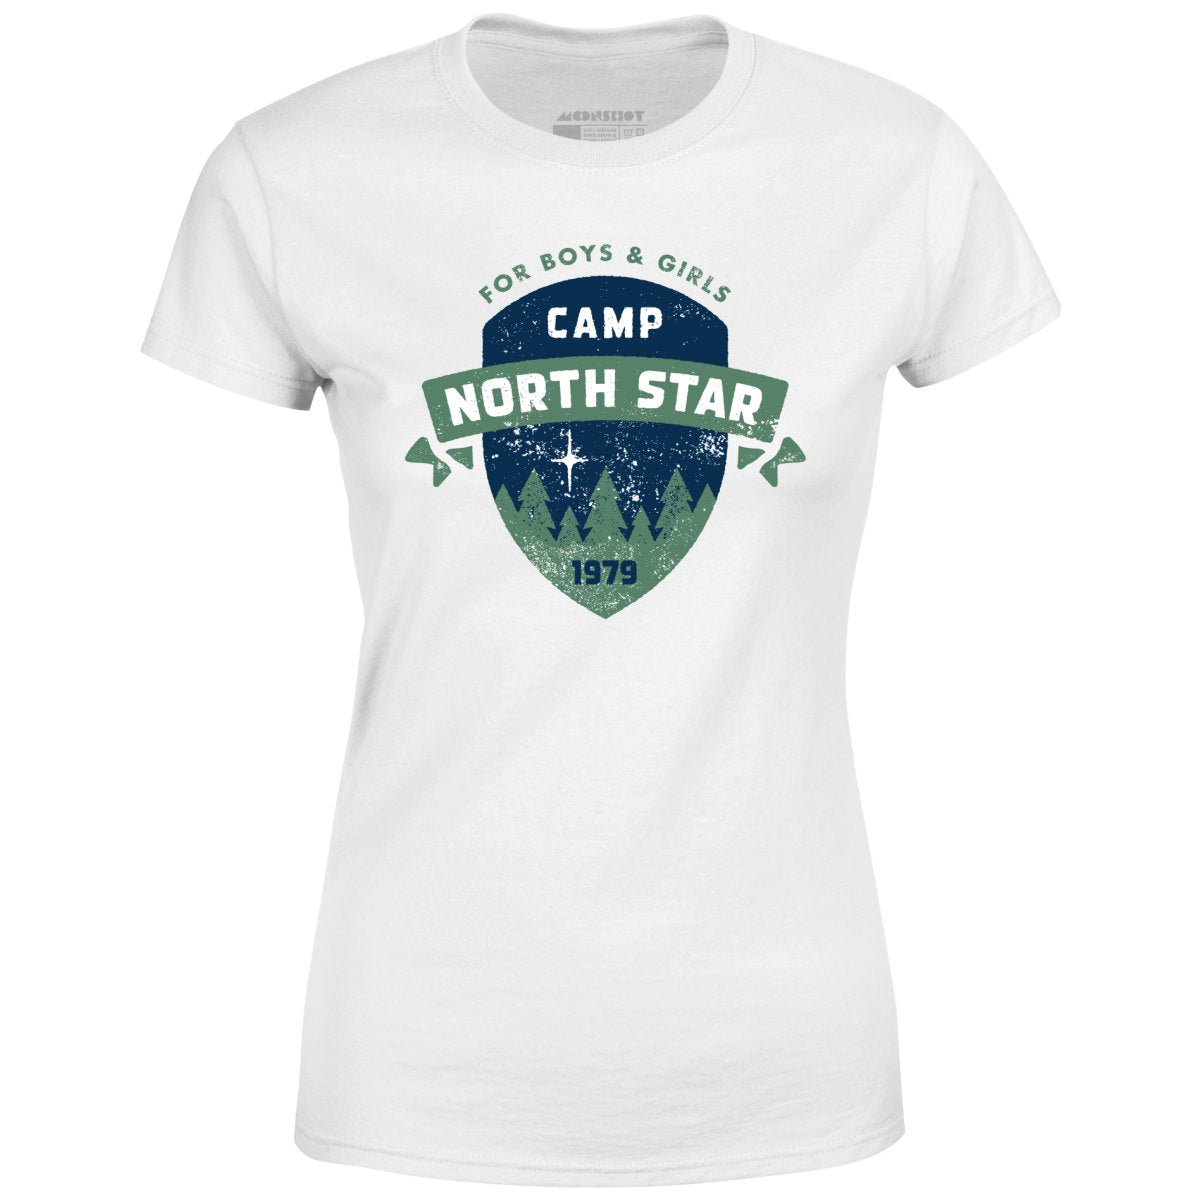 Camp North Star 1979 - Women's T-Shirt